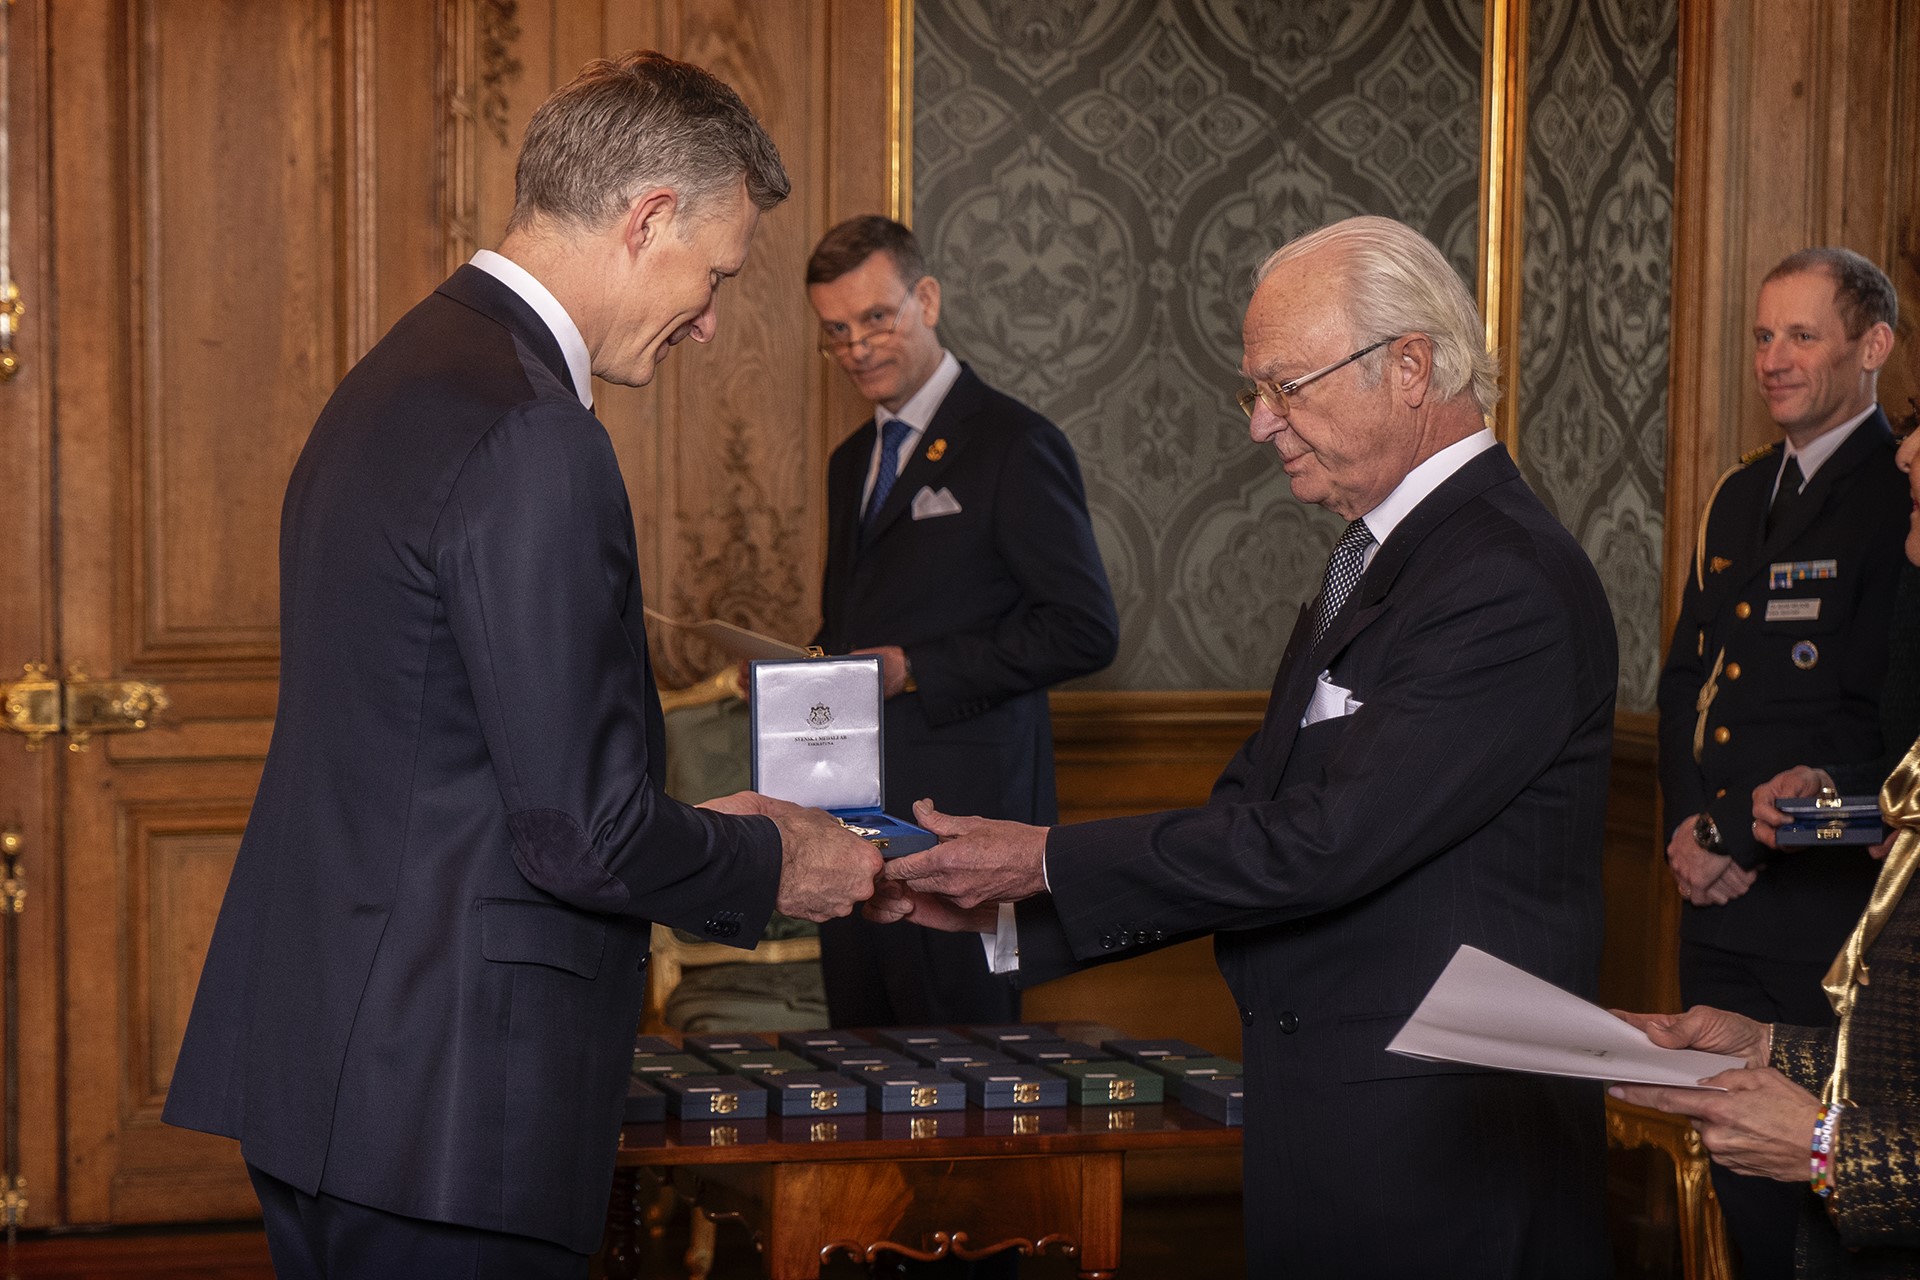 Mistra Geopolitics Board Member, Robert Egnell honoured by the King of Sweden